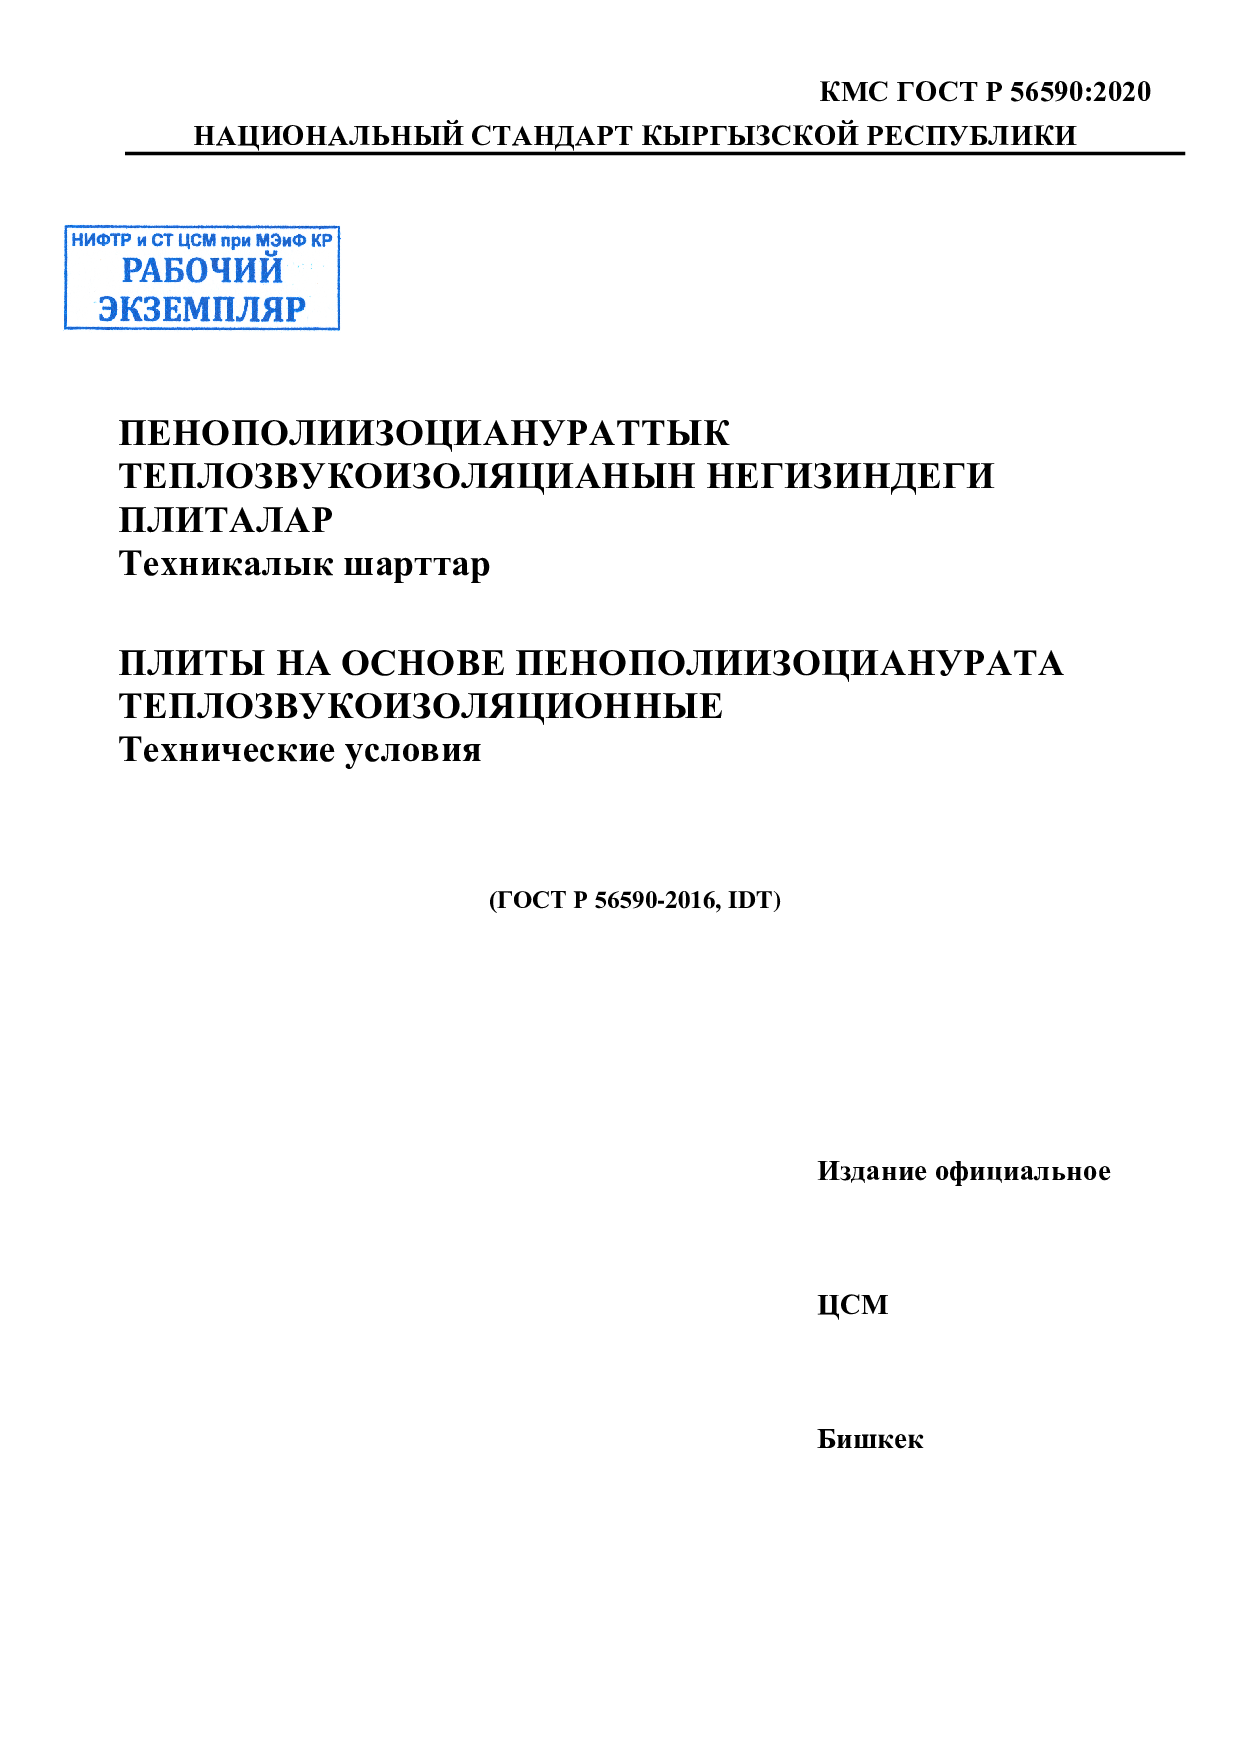 Плиты на основе пенополиизоцианурата теплозвукоизоляционные. Технические условия  (ГОСТ Р 56590-2016, IDT)